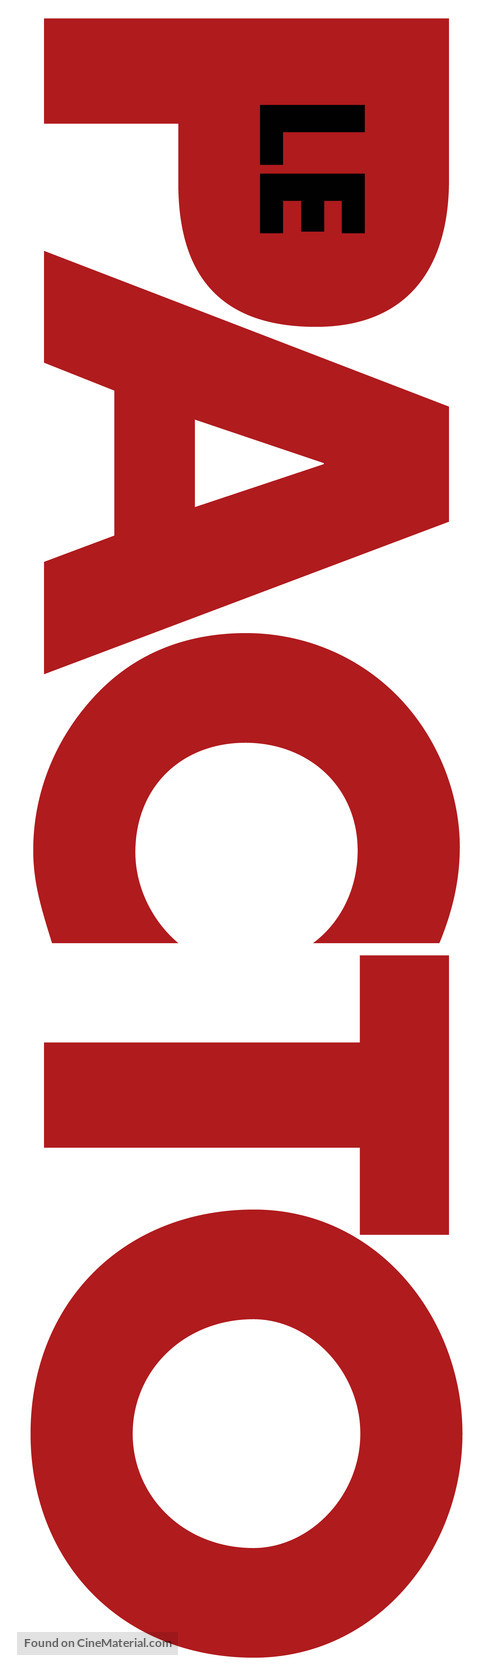 Seeking Justice - French Logo